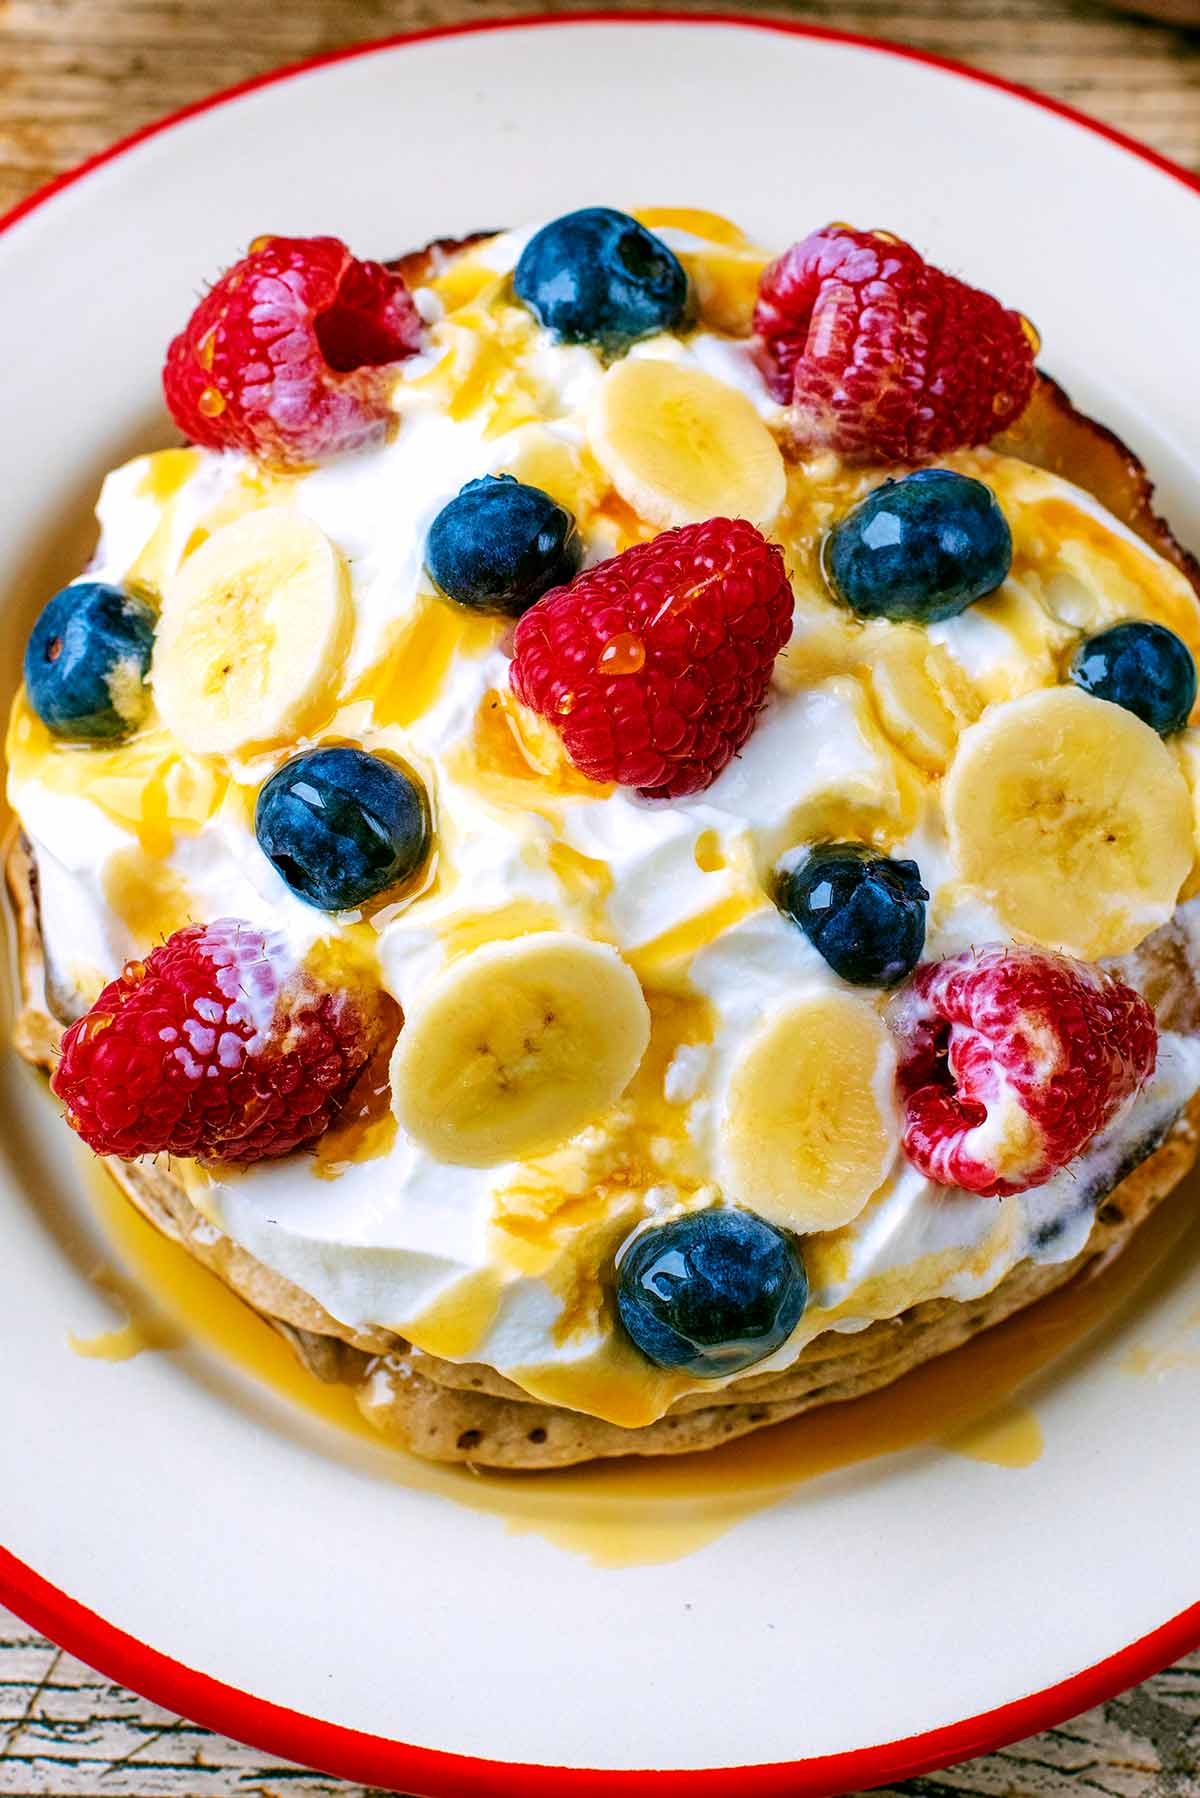 Cream topped banana pancakes with blueberries, raspberries and sliced banana.